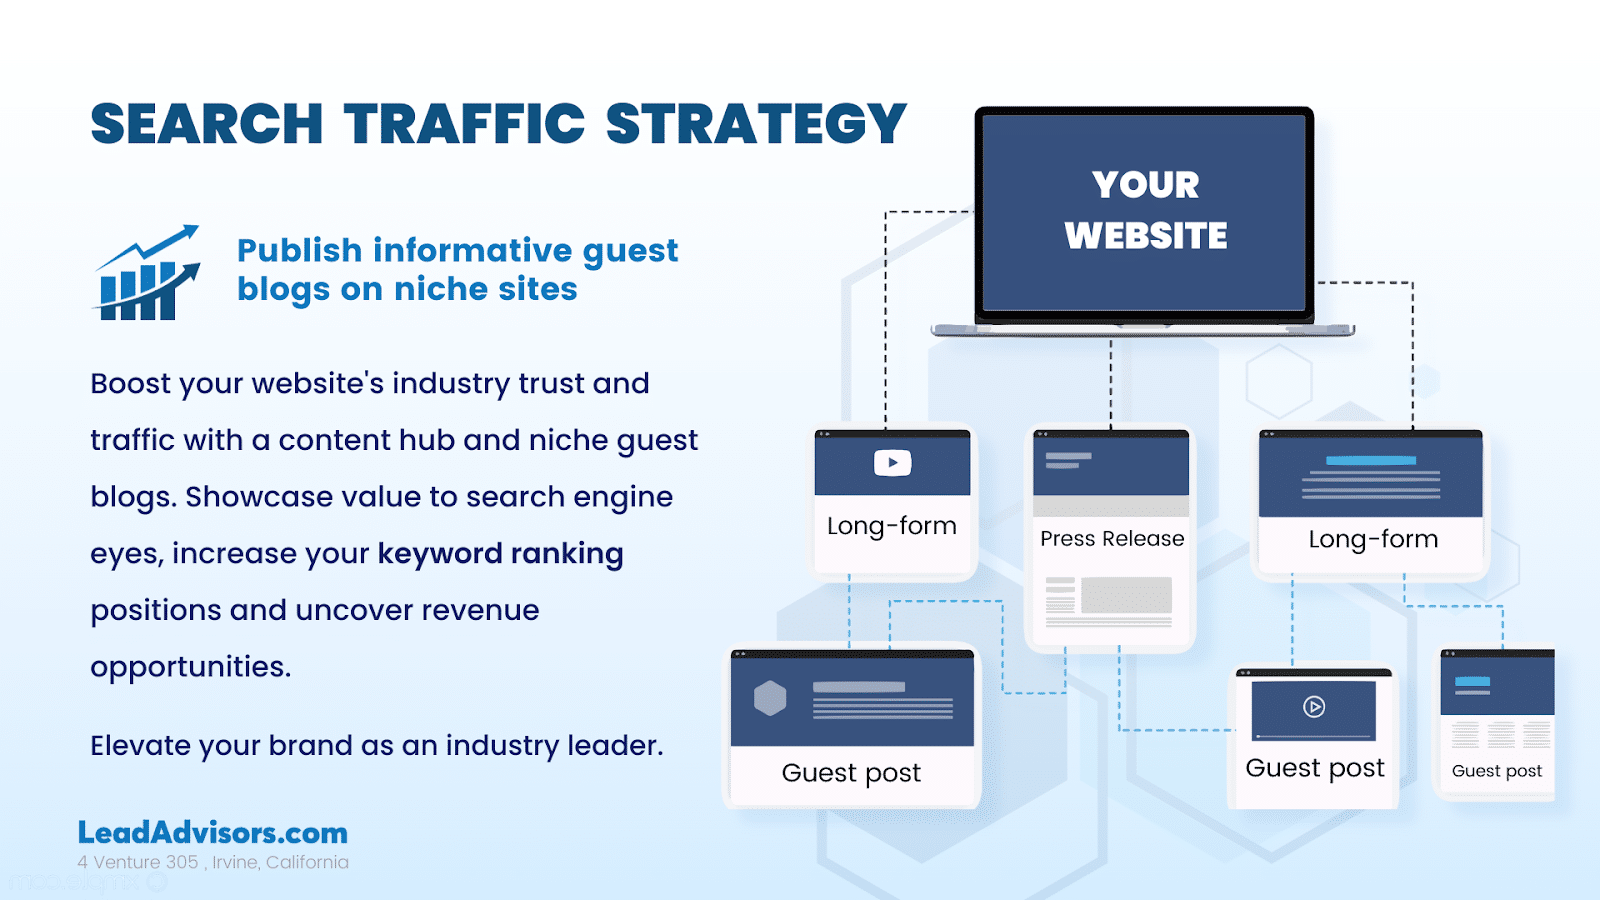 Search Traffic Strategy
